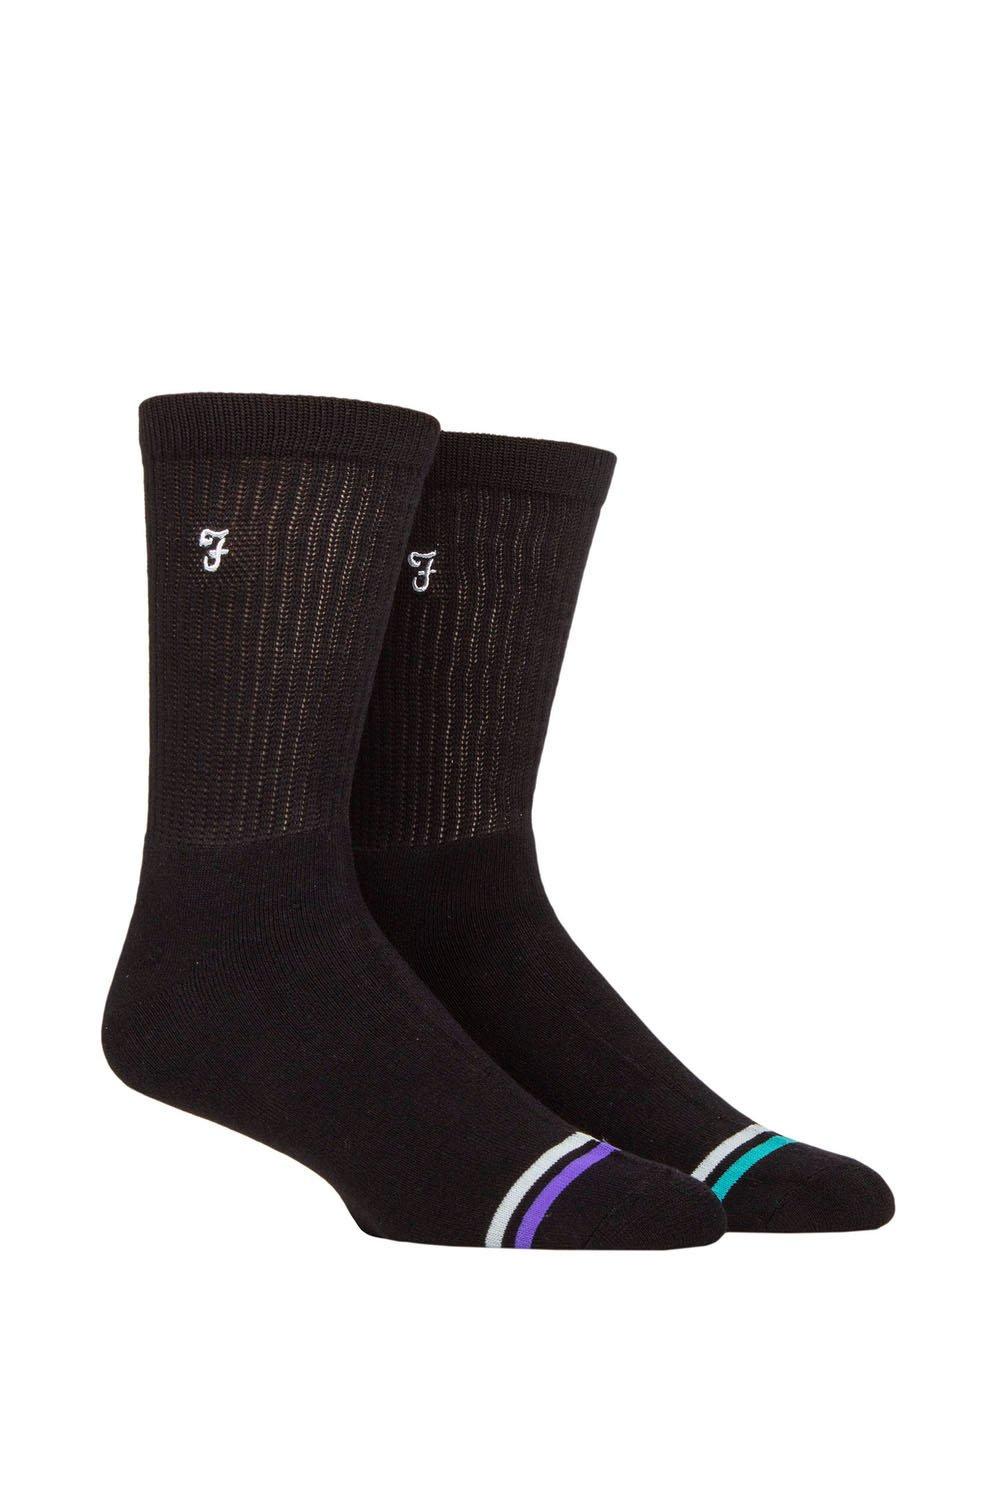 men business leisure striped thin long socks breathable socks commercial silk comfortable socks bamboo fiber foot bath socks Мужские 2 пары бамбуковых носков для отдыха Farah, черный